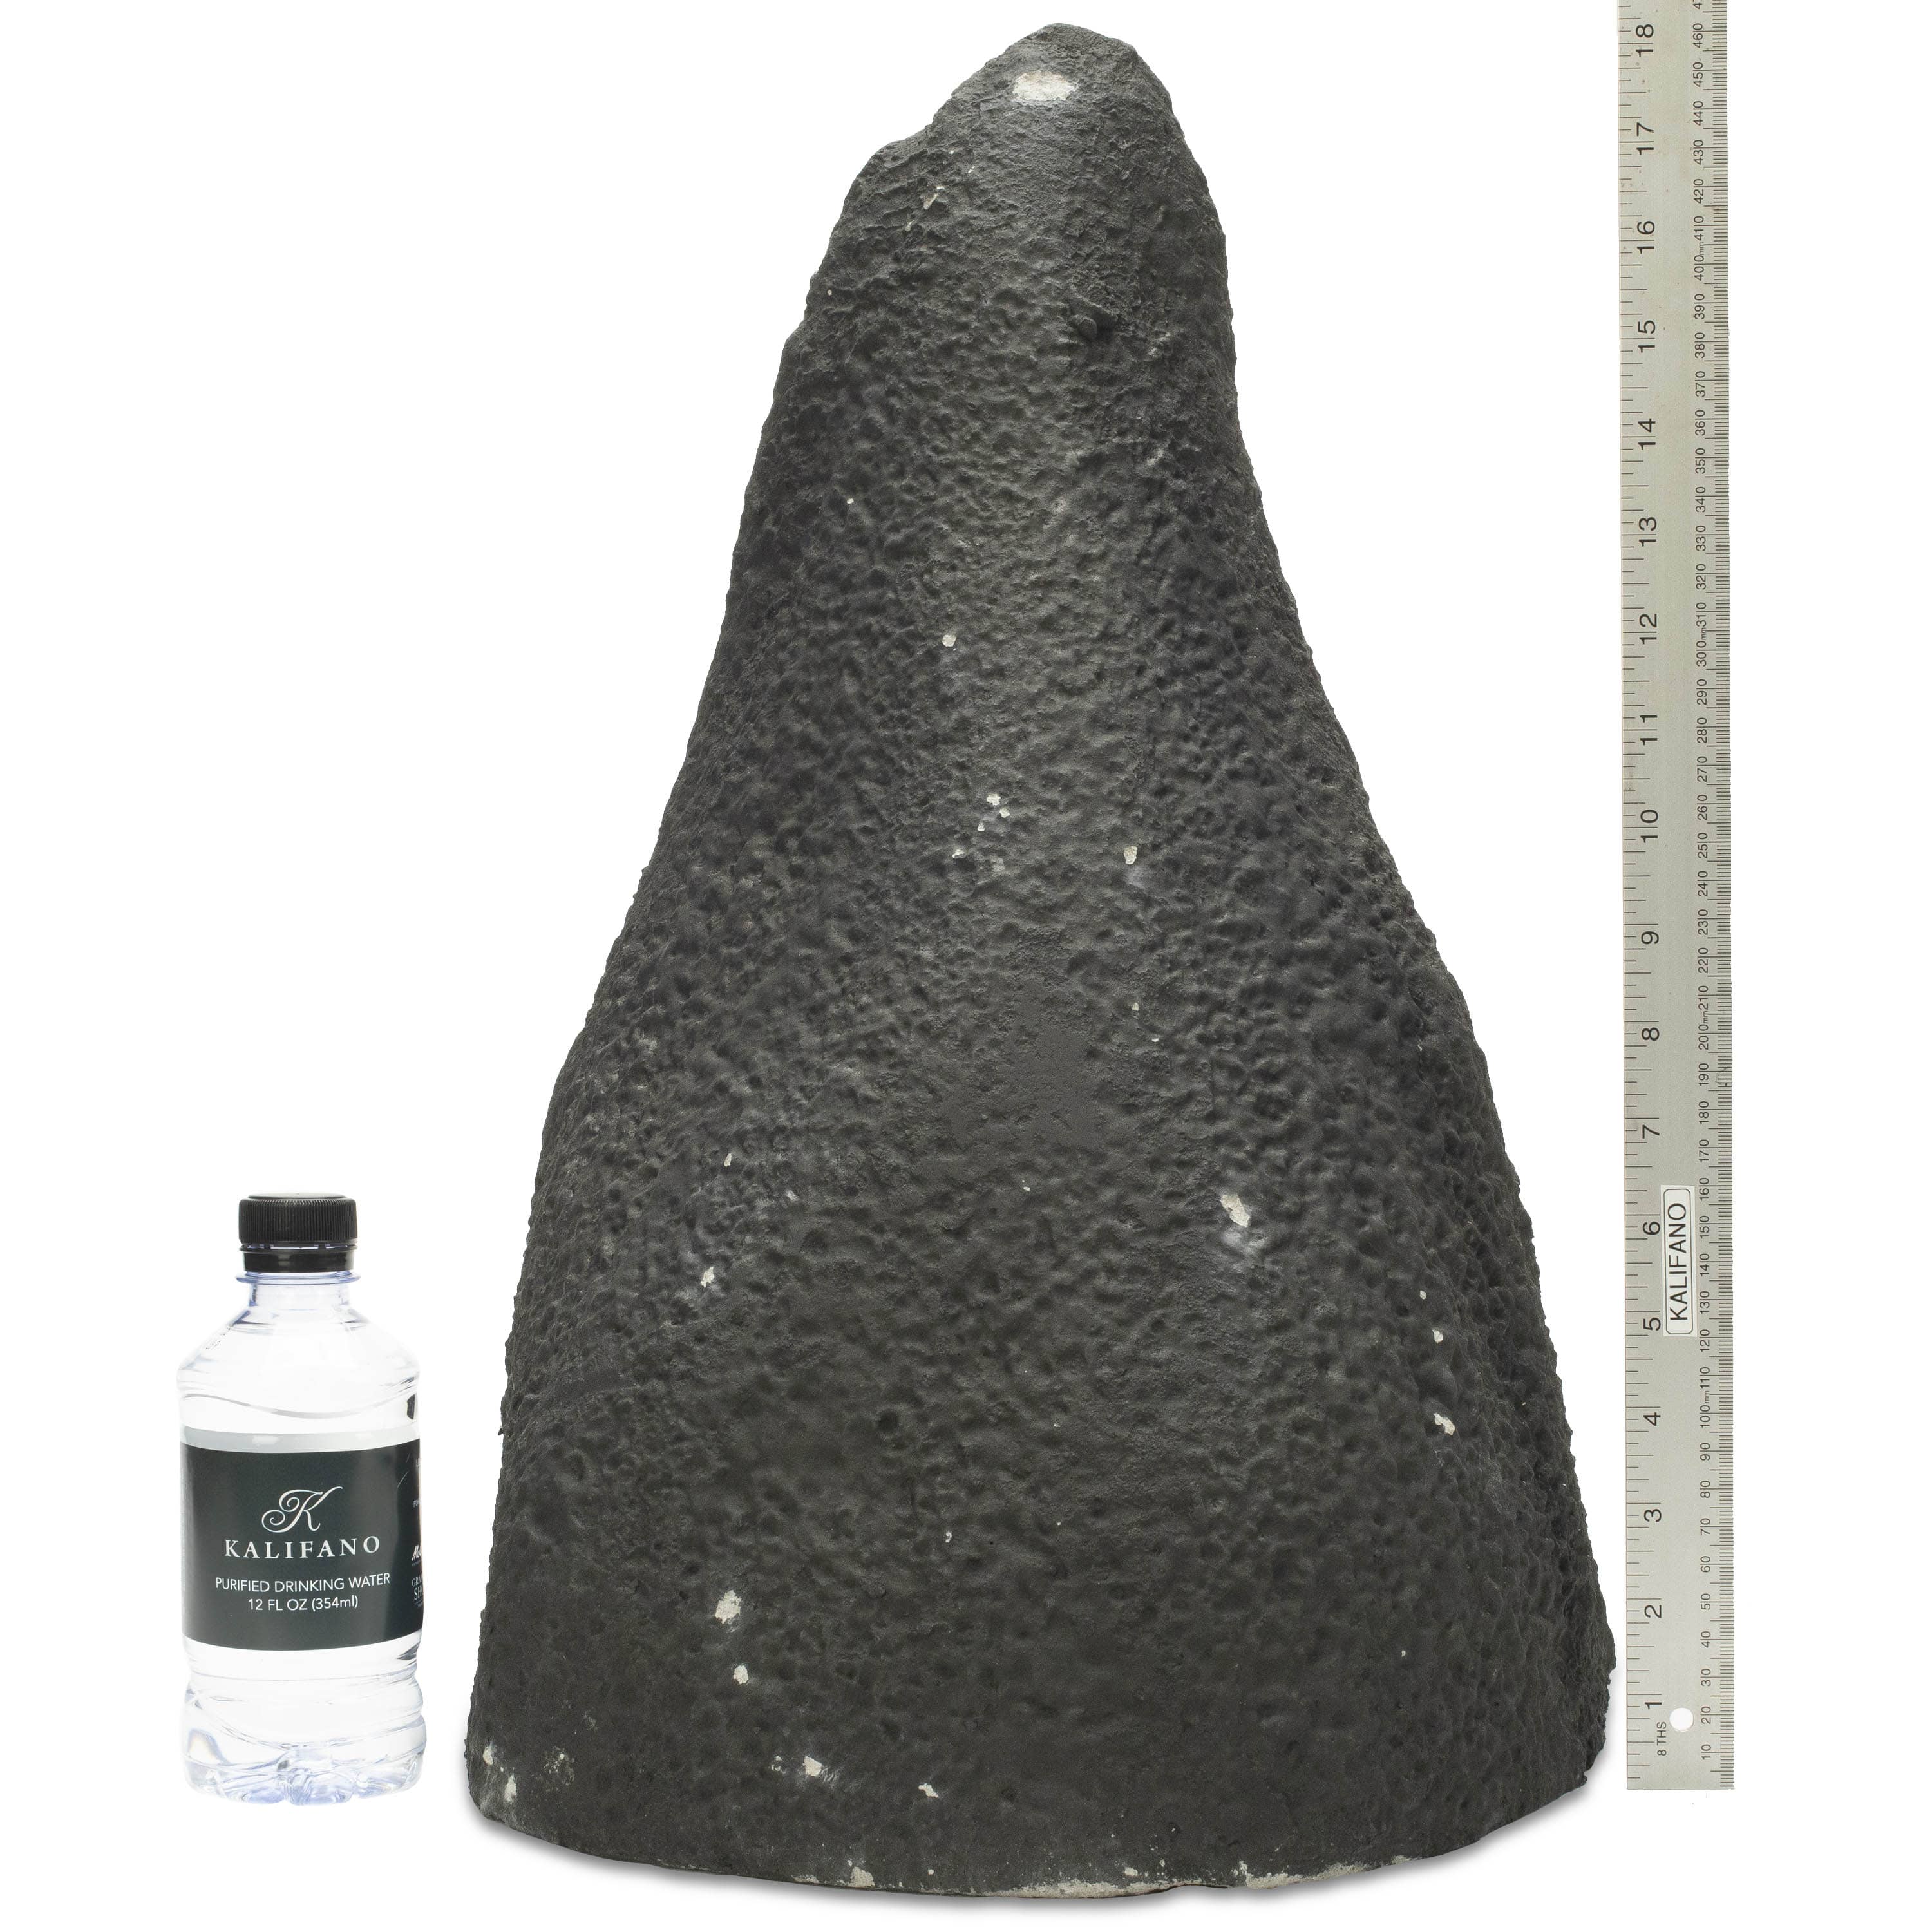 Kalifano Agate Agate Geode - 19 in. / 77 lbs BAG9000.006